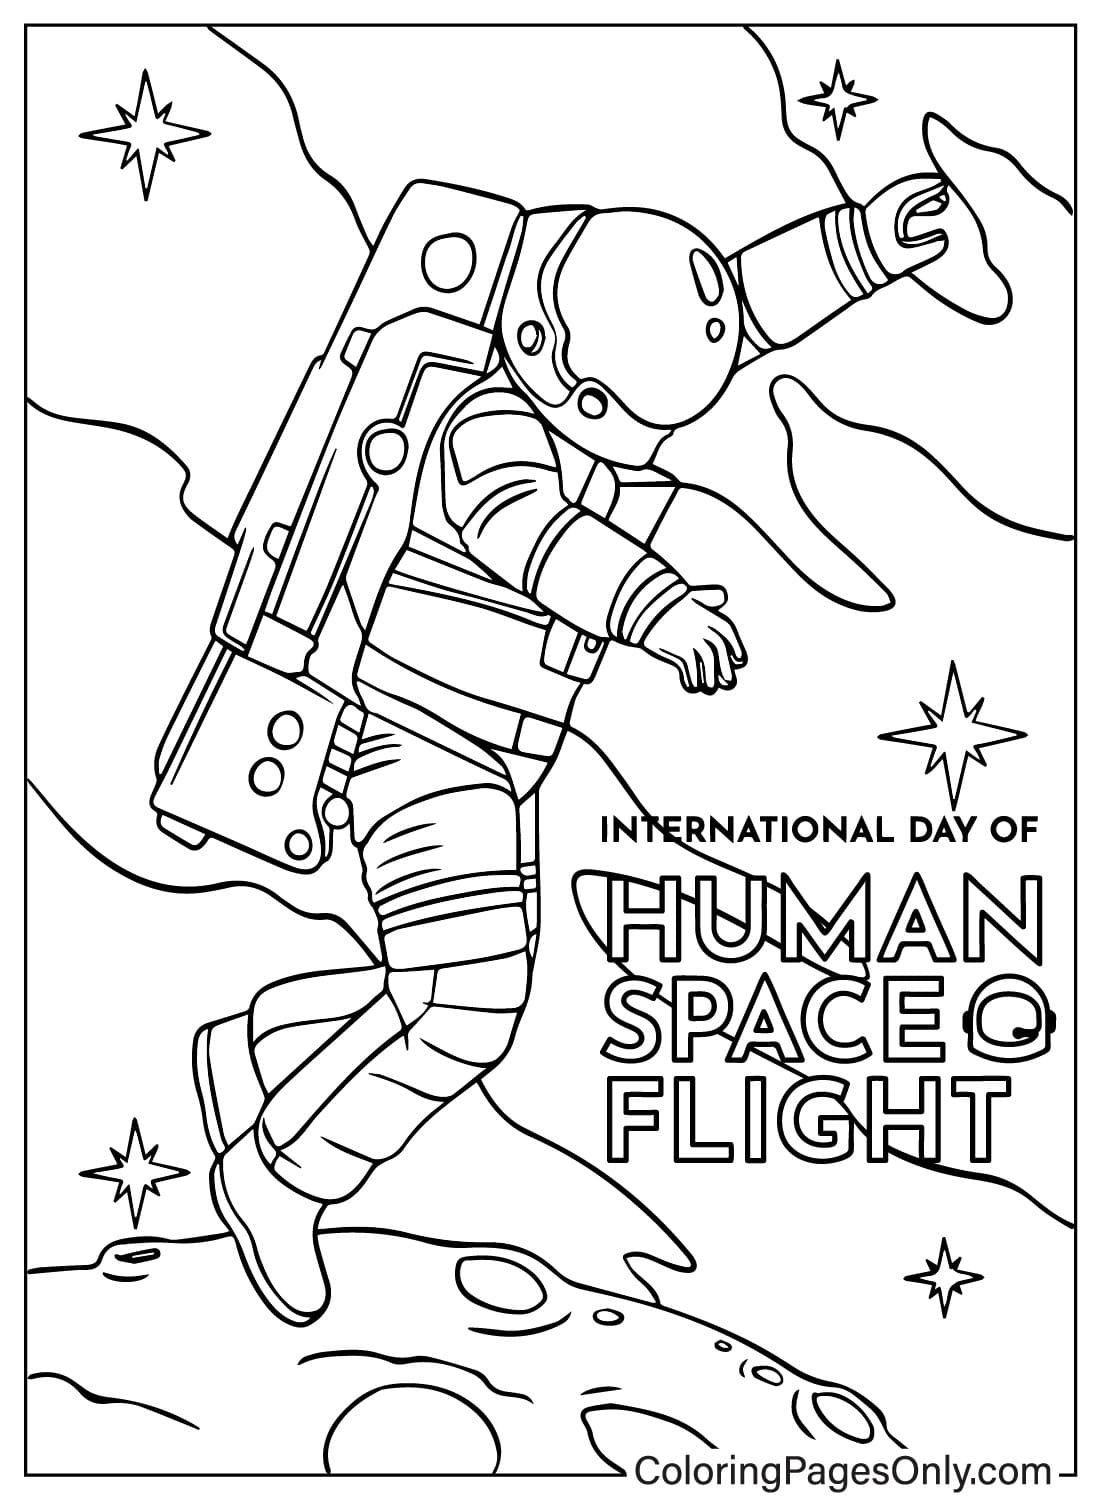 International Day of Human Space Flight Coloring Page for Adults from International Day of Human Space Flight